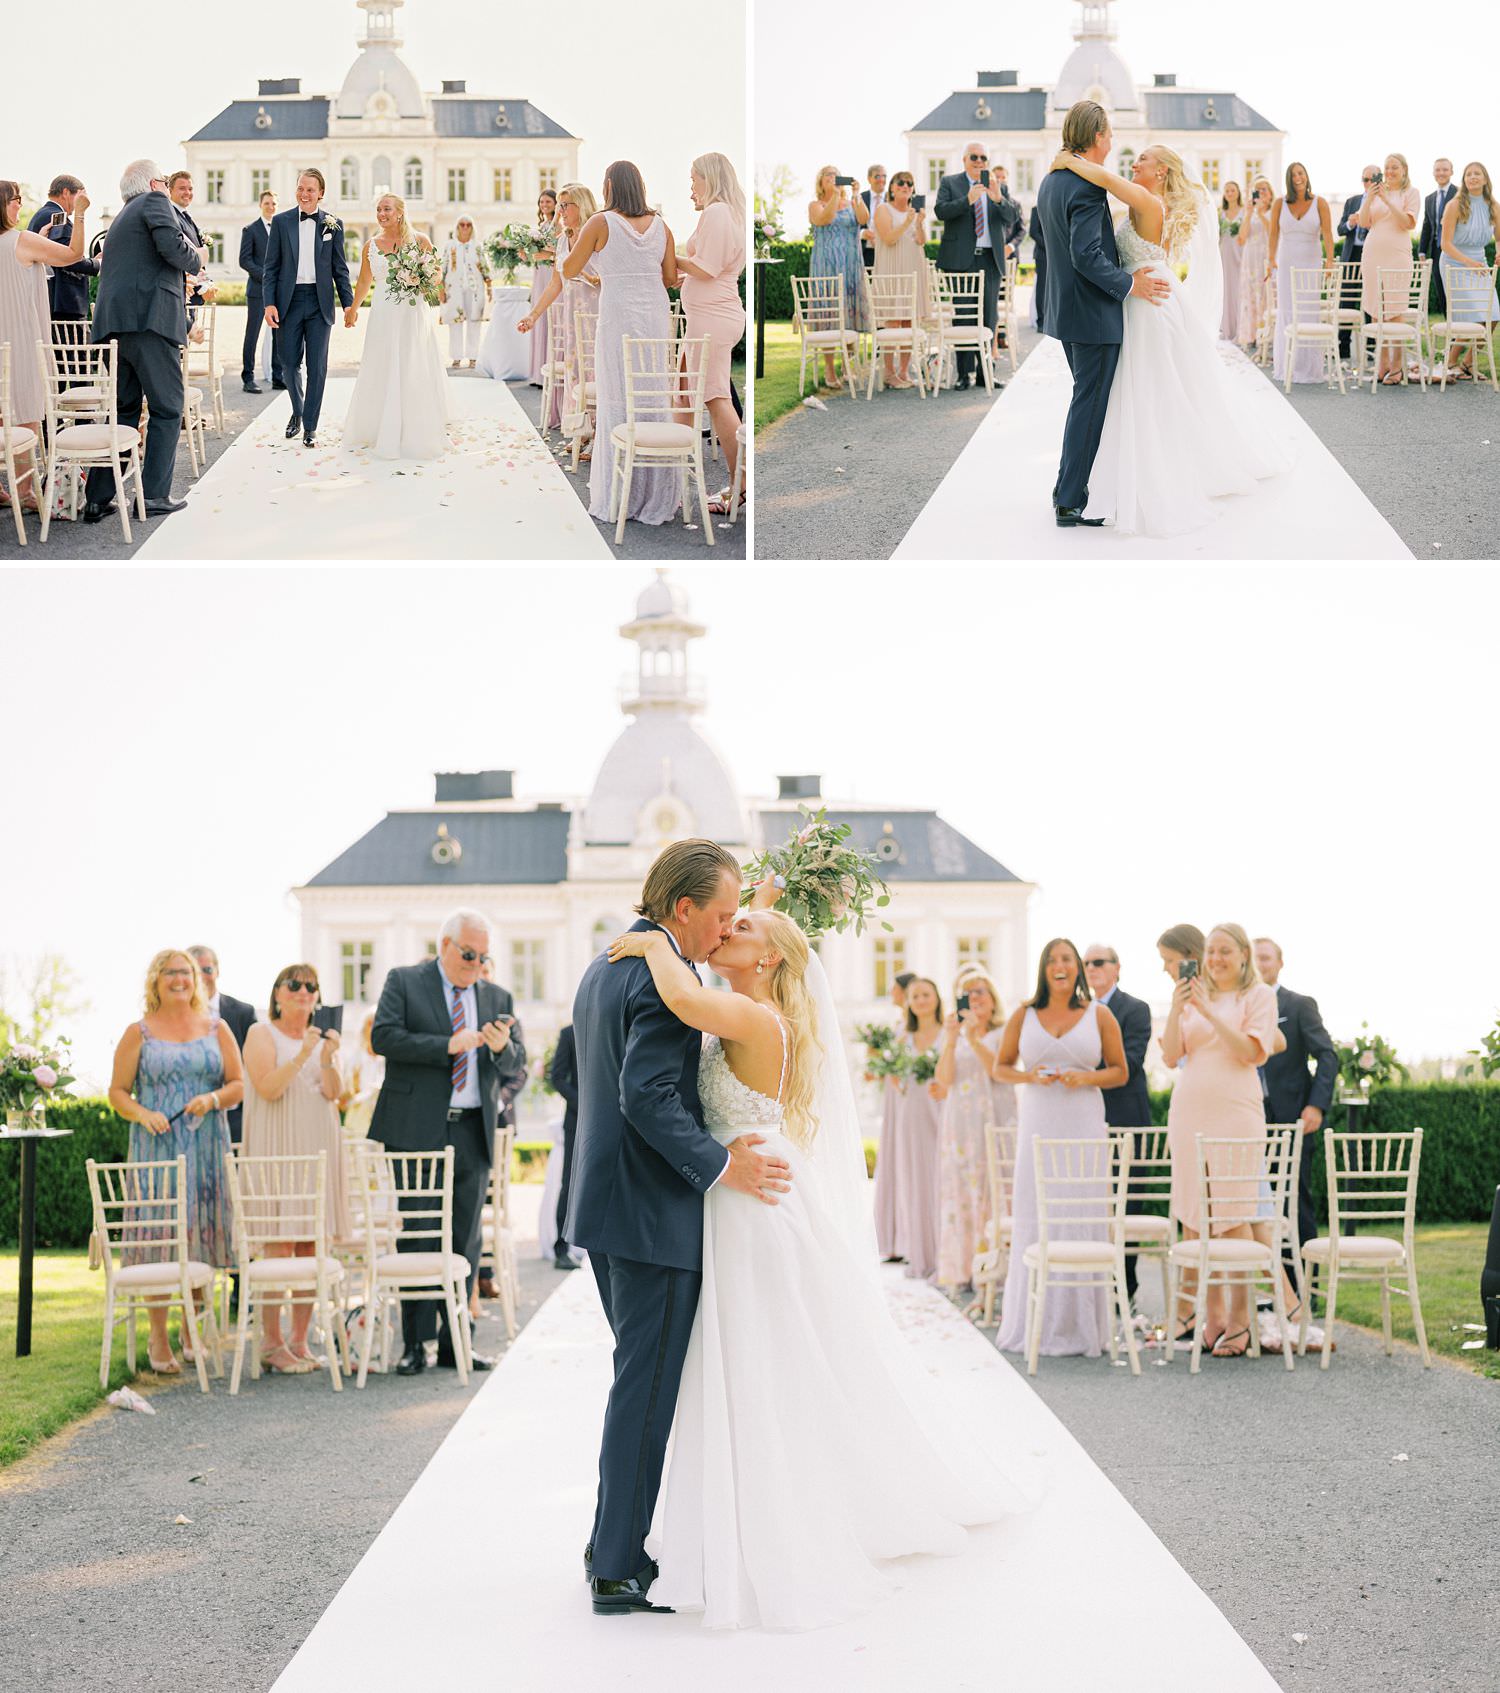 Intimate wedding of 15 people during Corona 2020 at Bro Hof Slott